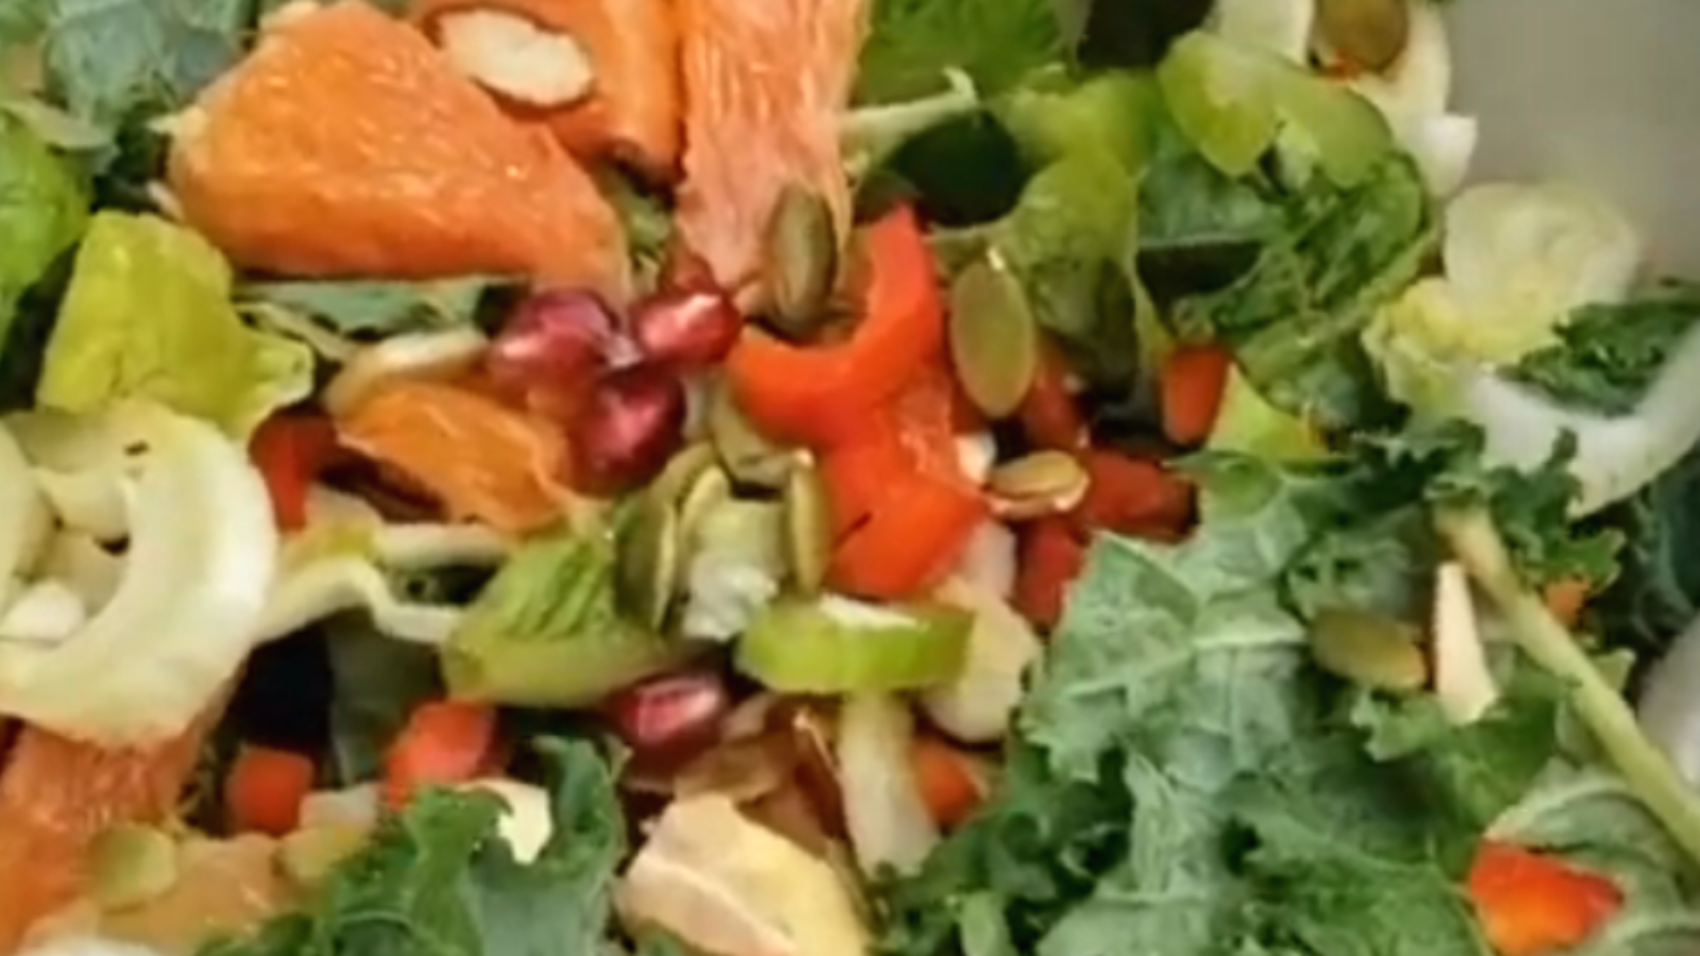 Winter Citrus and Kale Salad